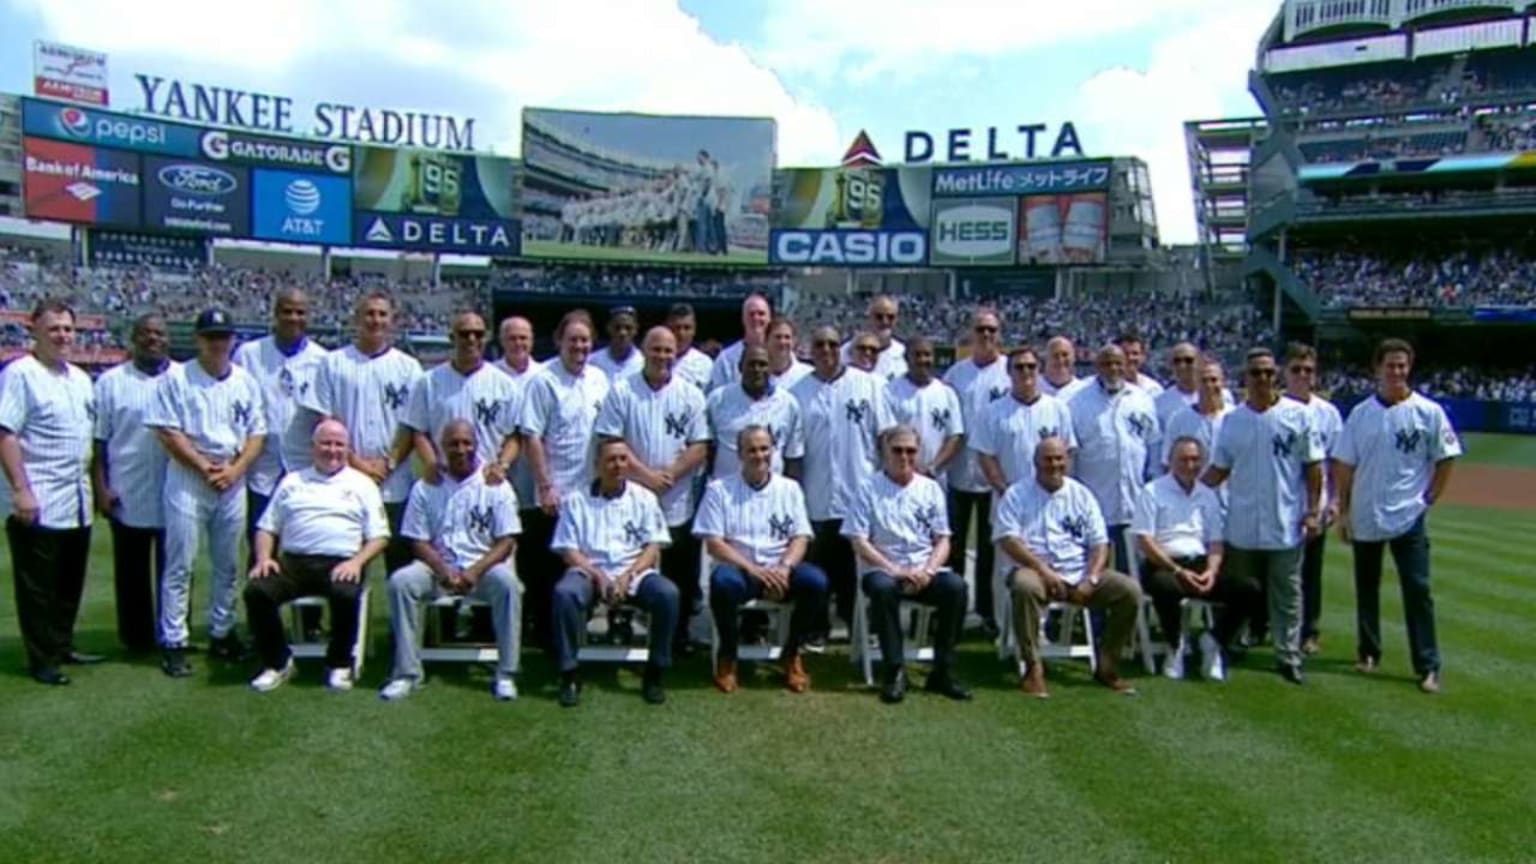 Bombers honor 1996 World Series title team